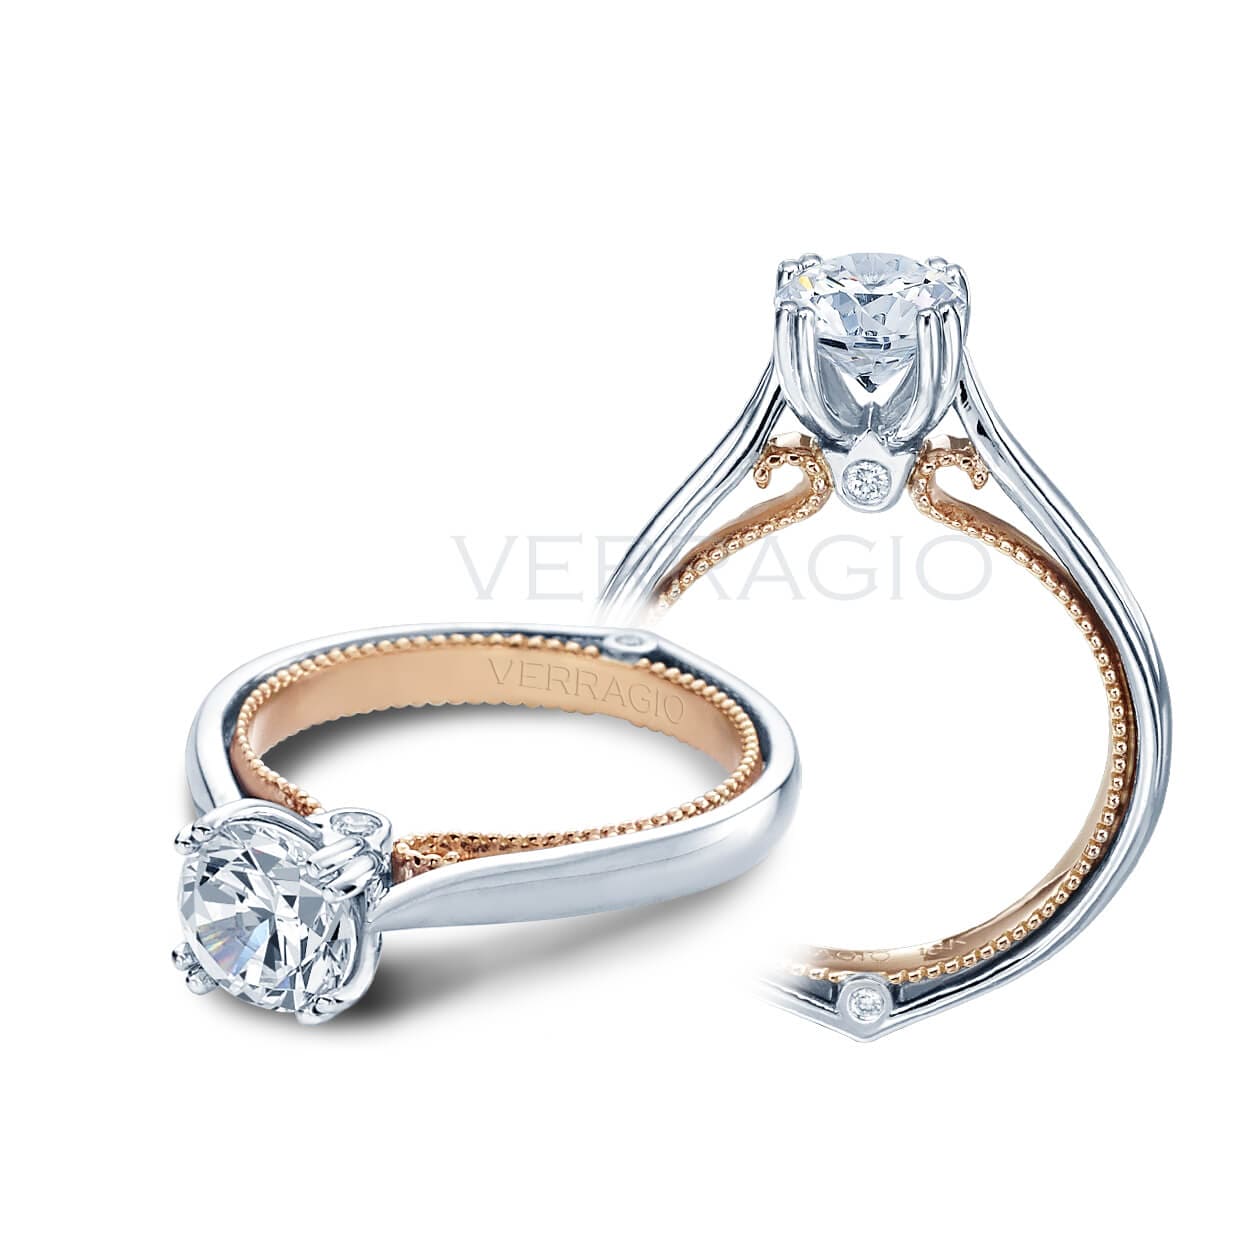 33 Unbelievable Verragio Engagement Rings | Verragio engagement rings, Rose engagement  ring, Wedding jewelry